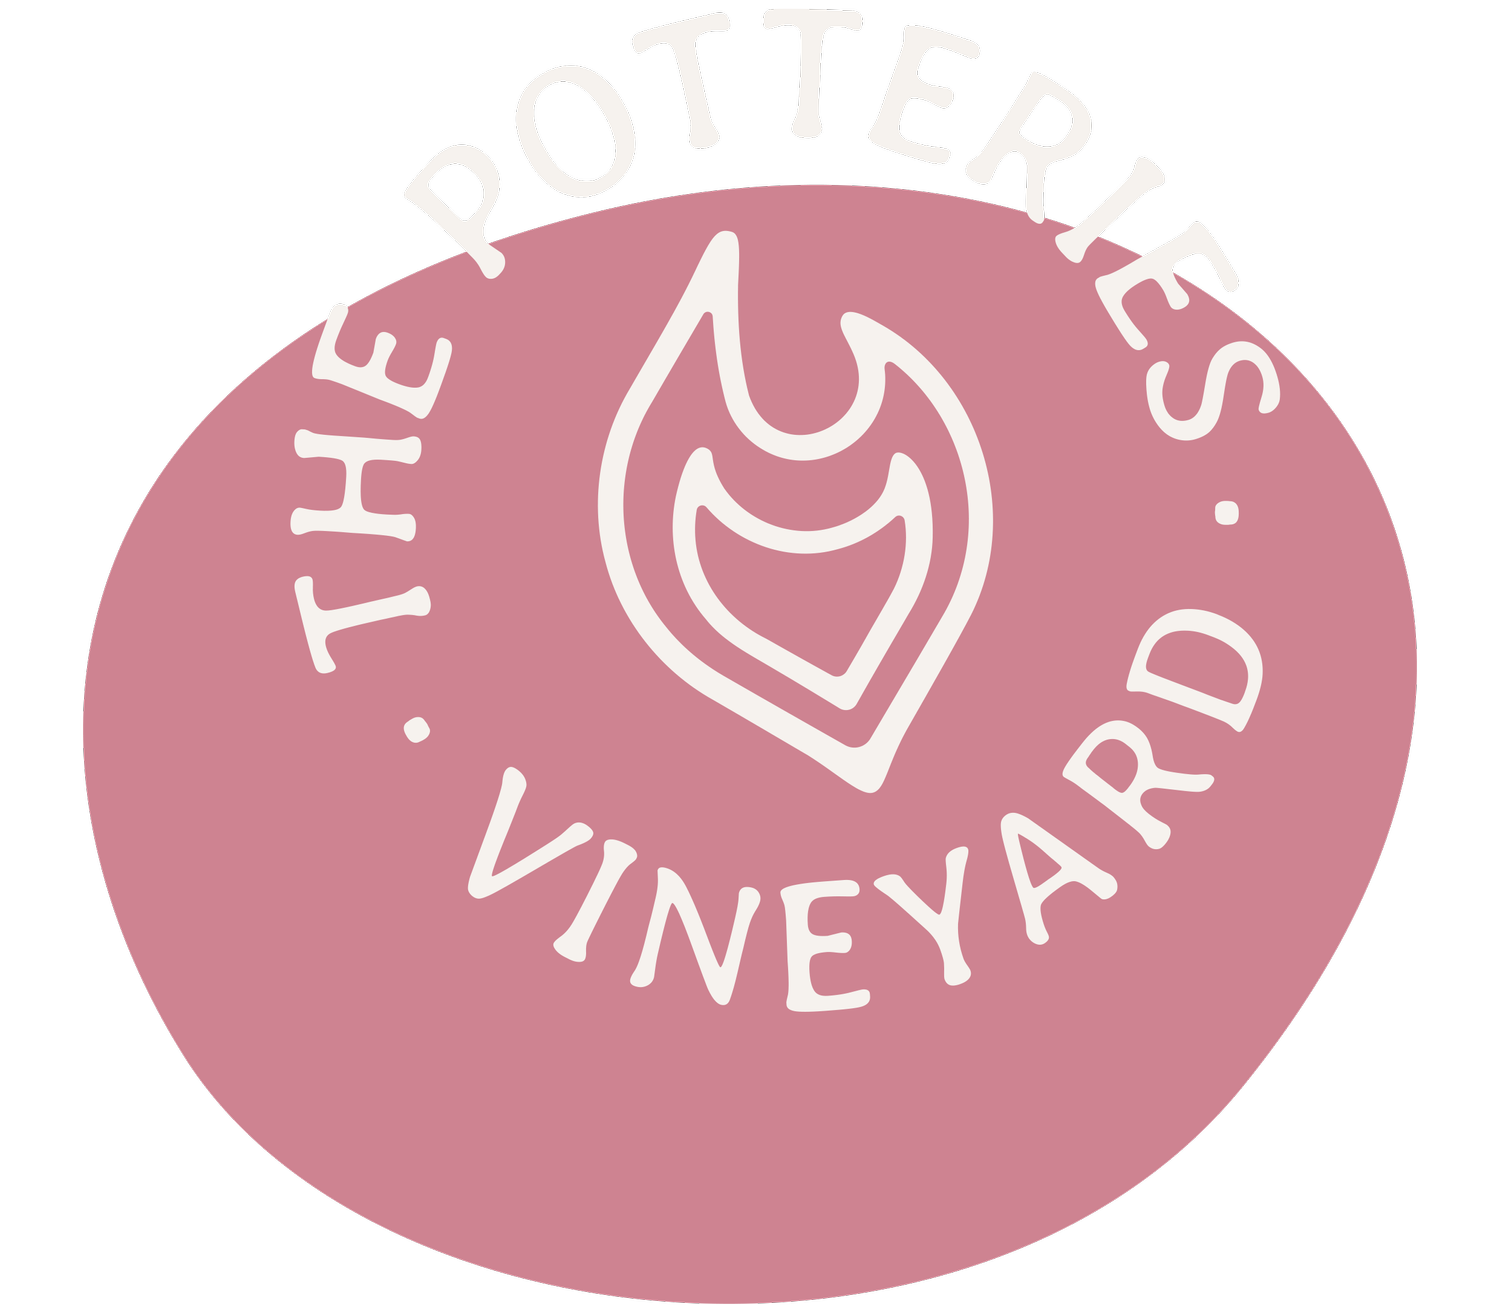 The Potteries Vineyard